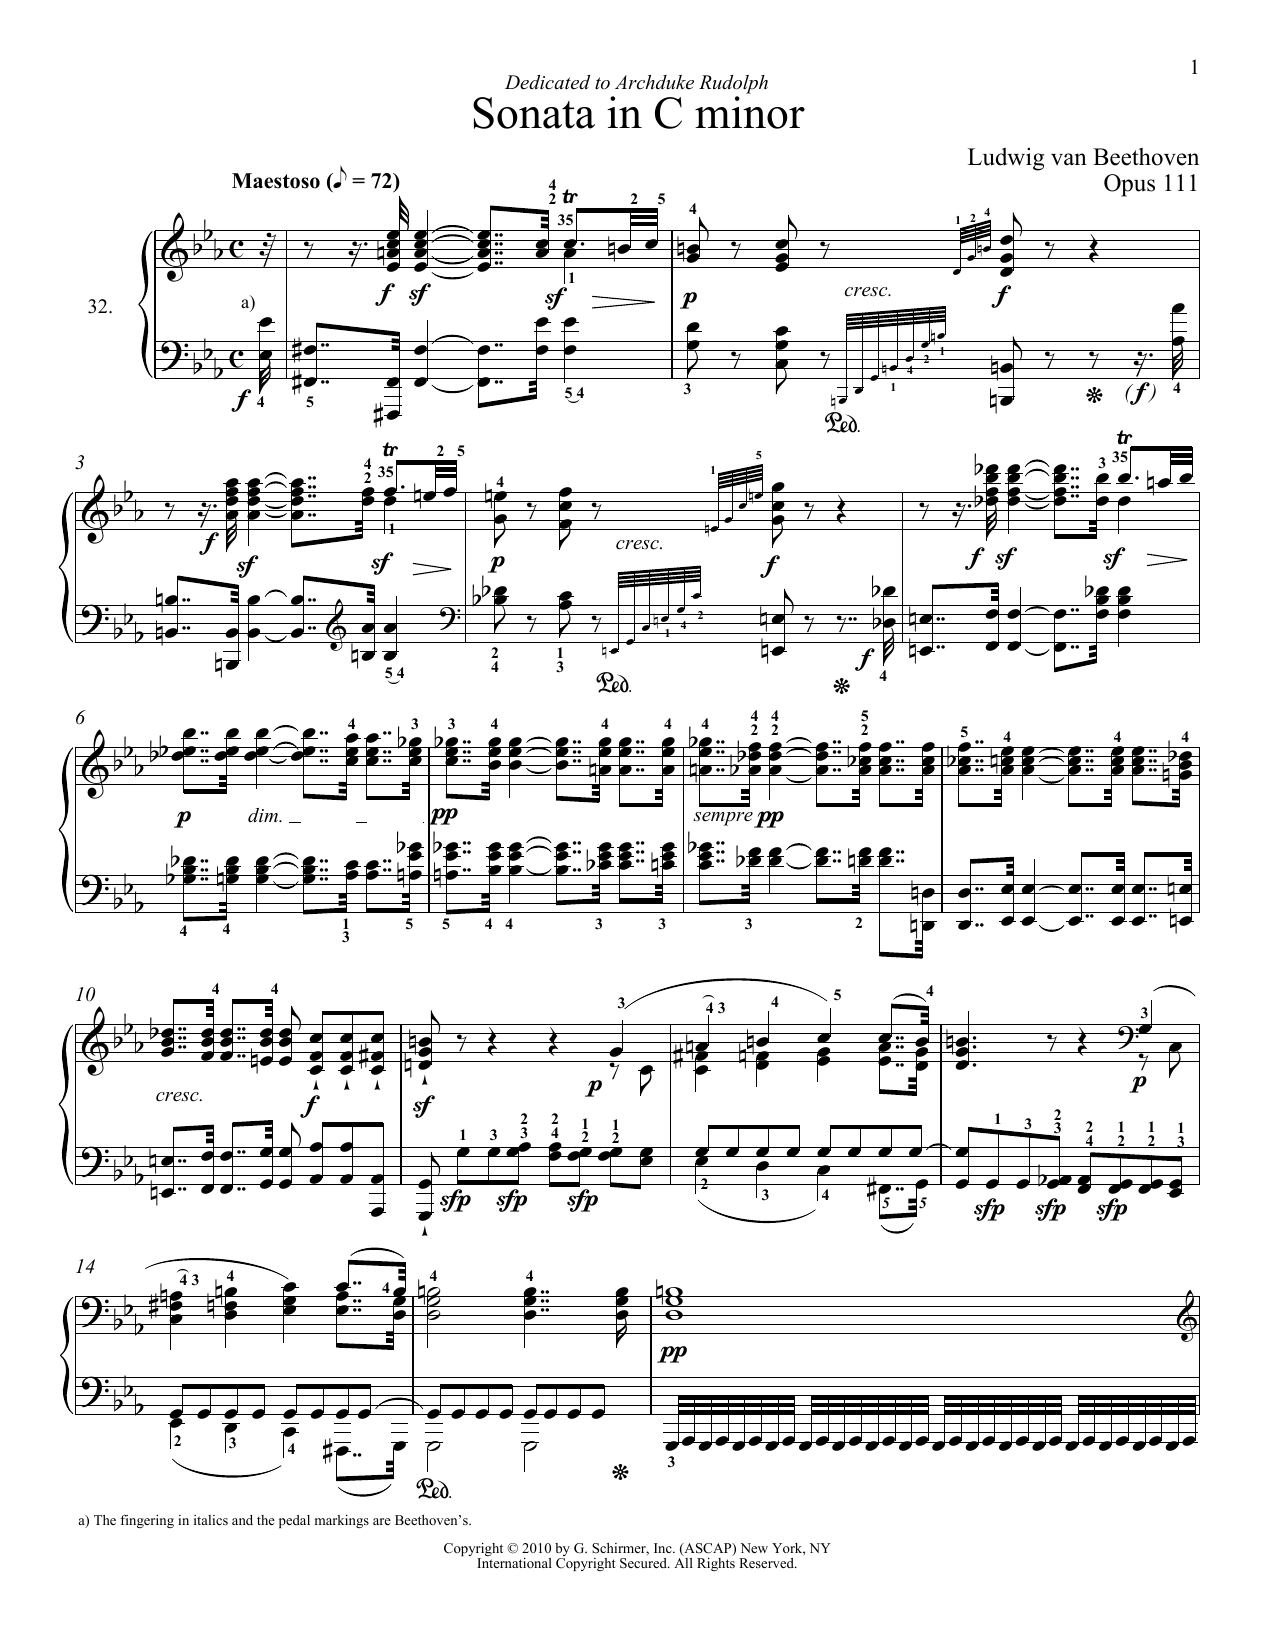 Download Ludwig van Beethoven Piano Sonata No. 32 In C minor, Op. 111 Sheet Music